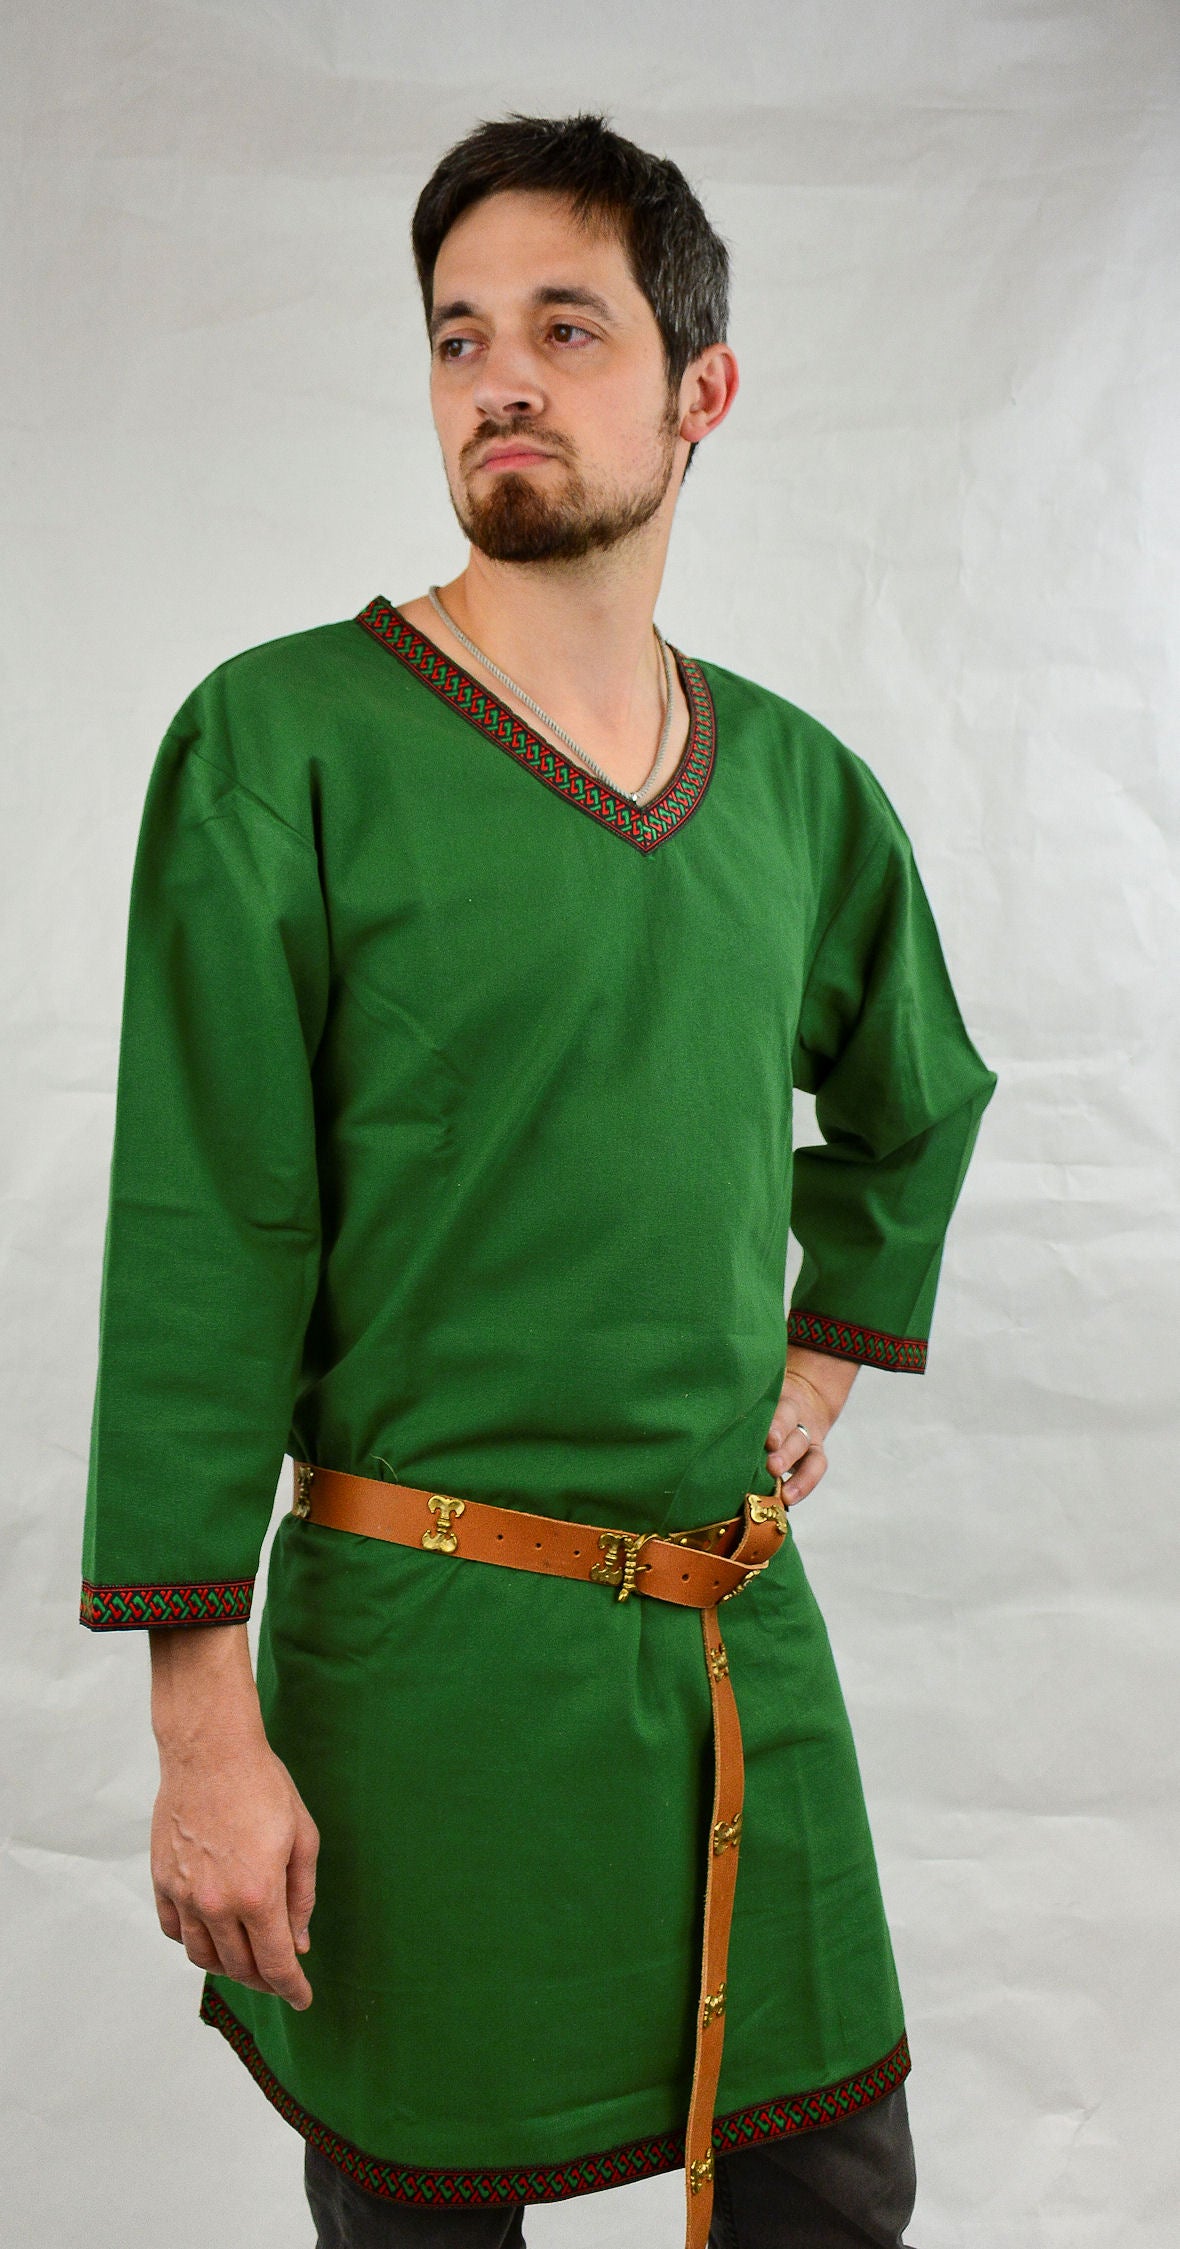 male model wearing a green Viking Tunic